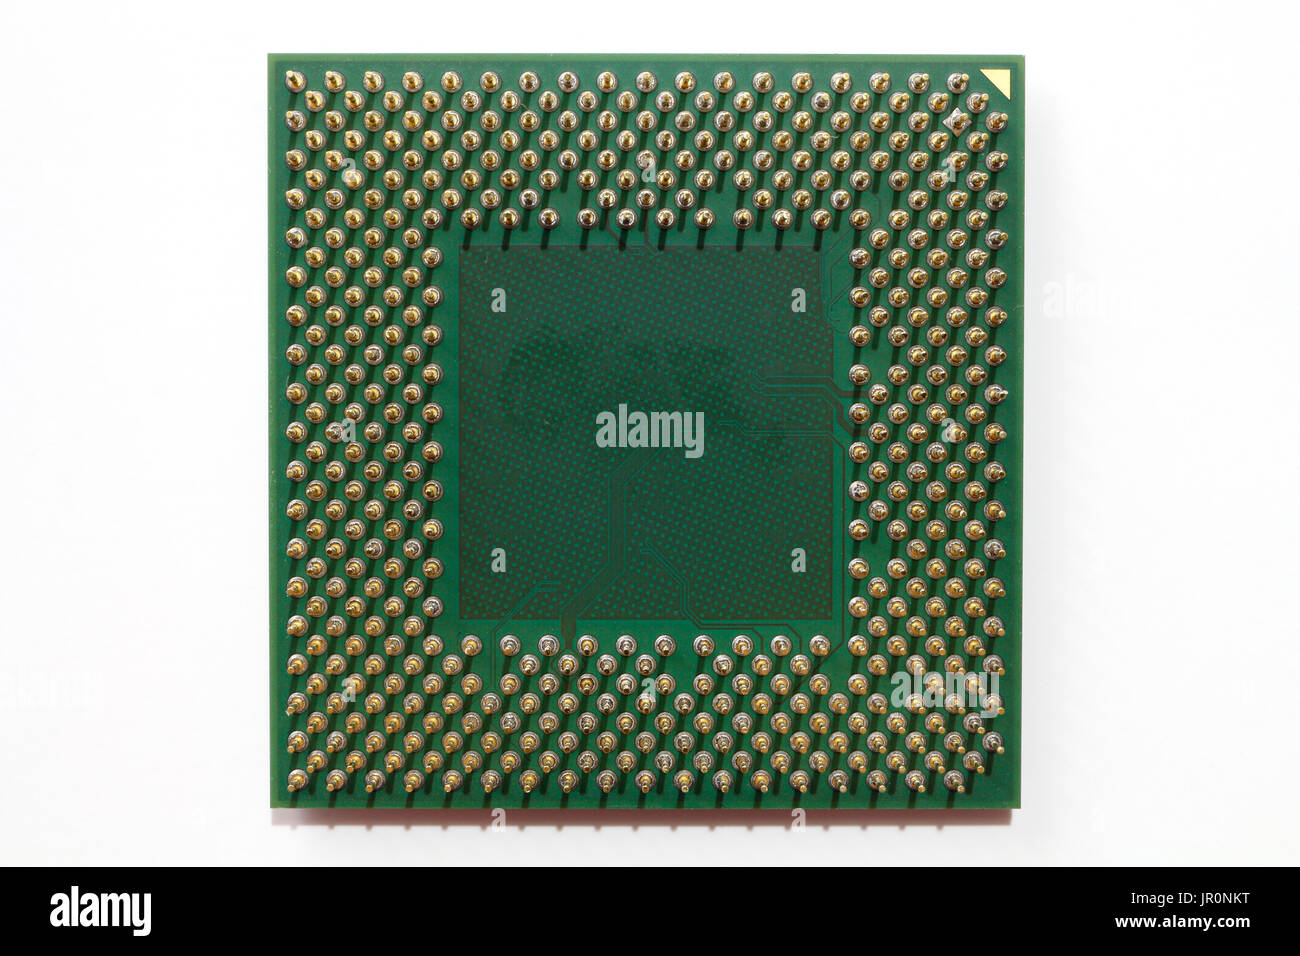 Underside of AMD Athlon processor, showing pin arrangement Stock Photo